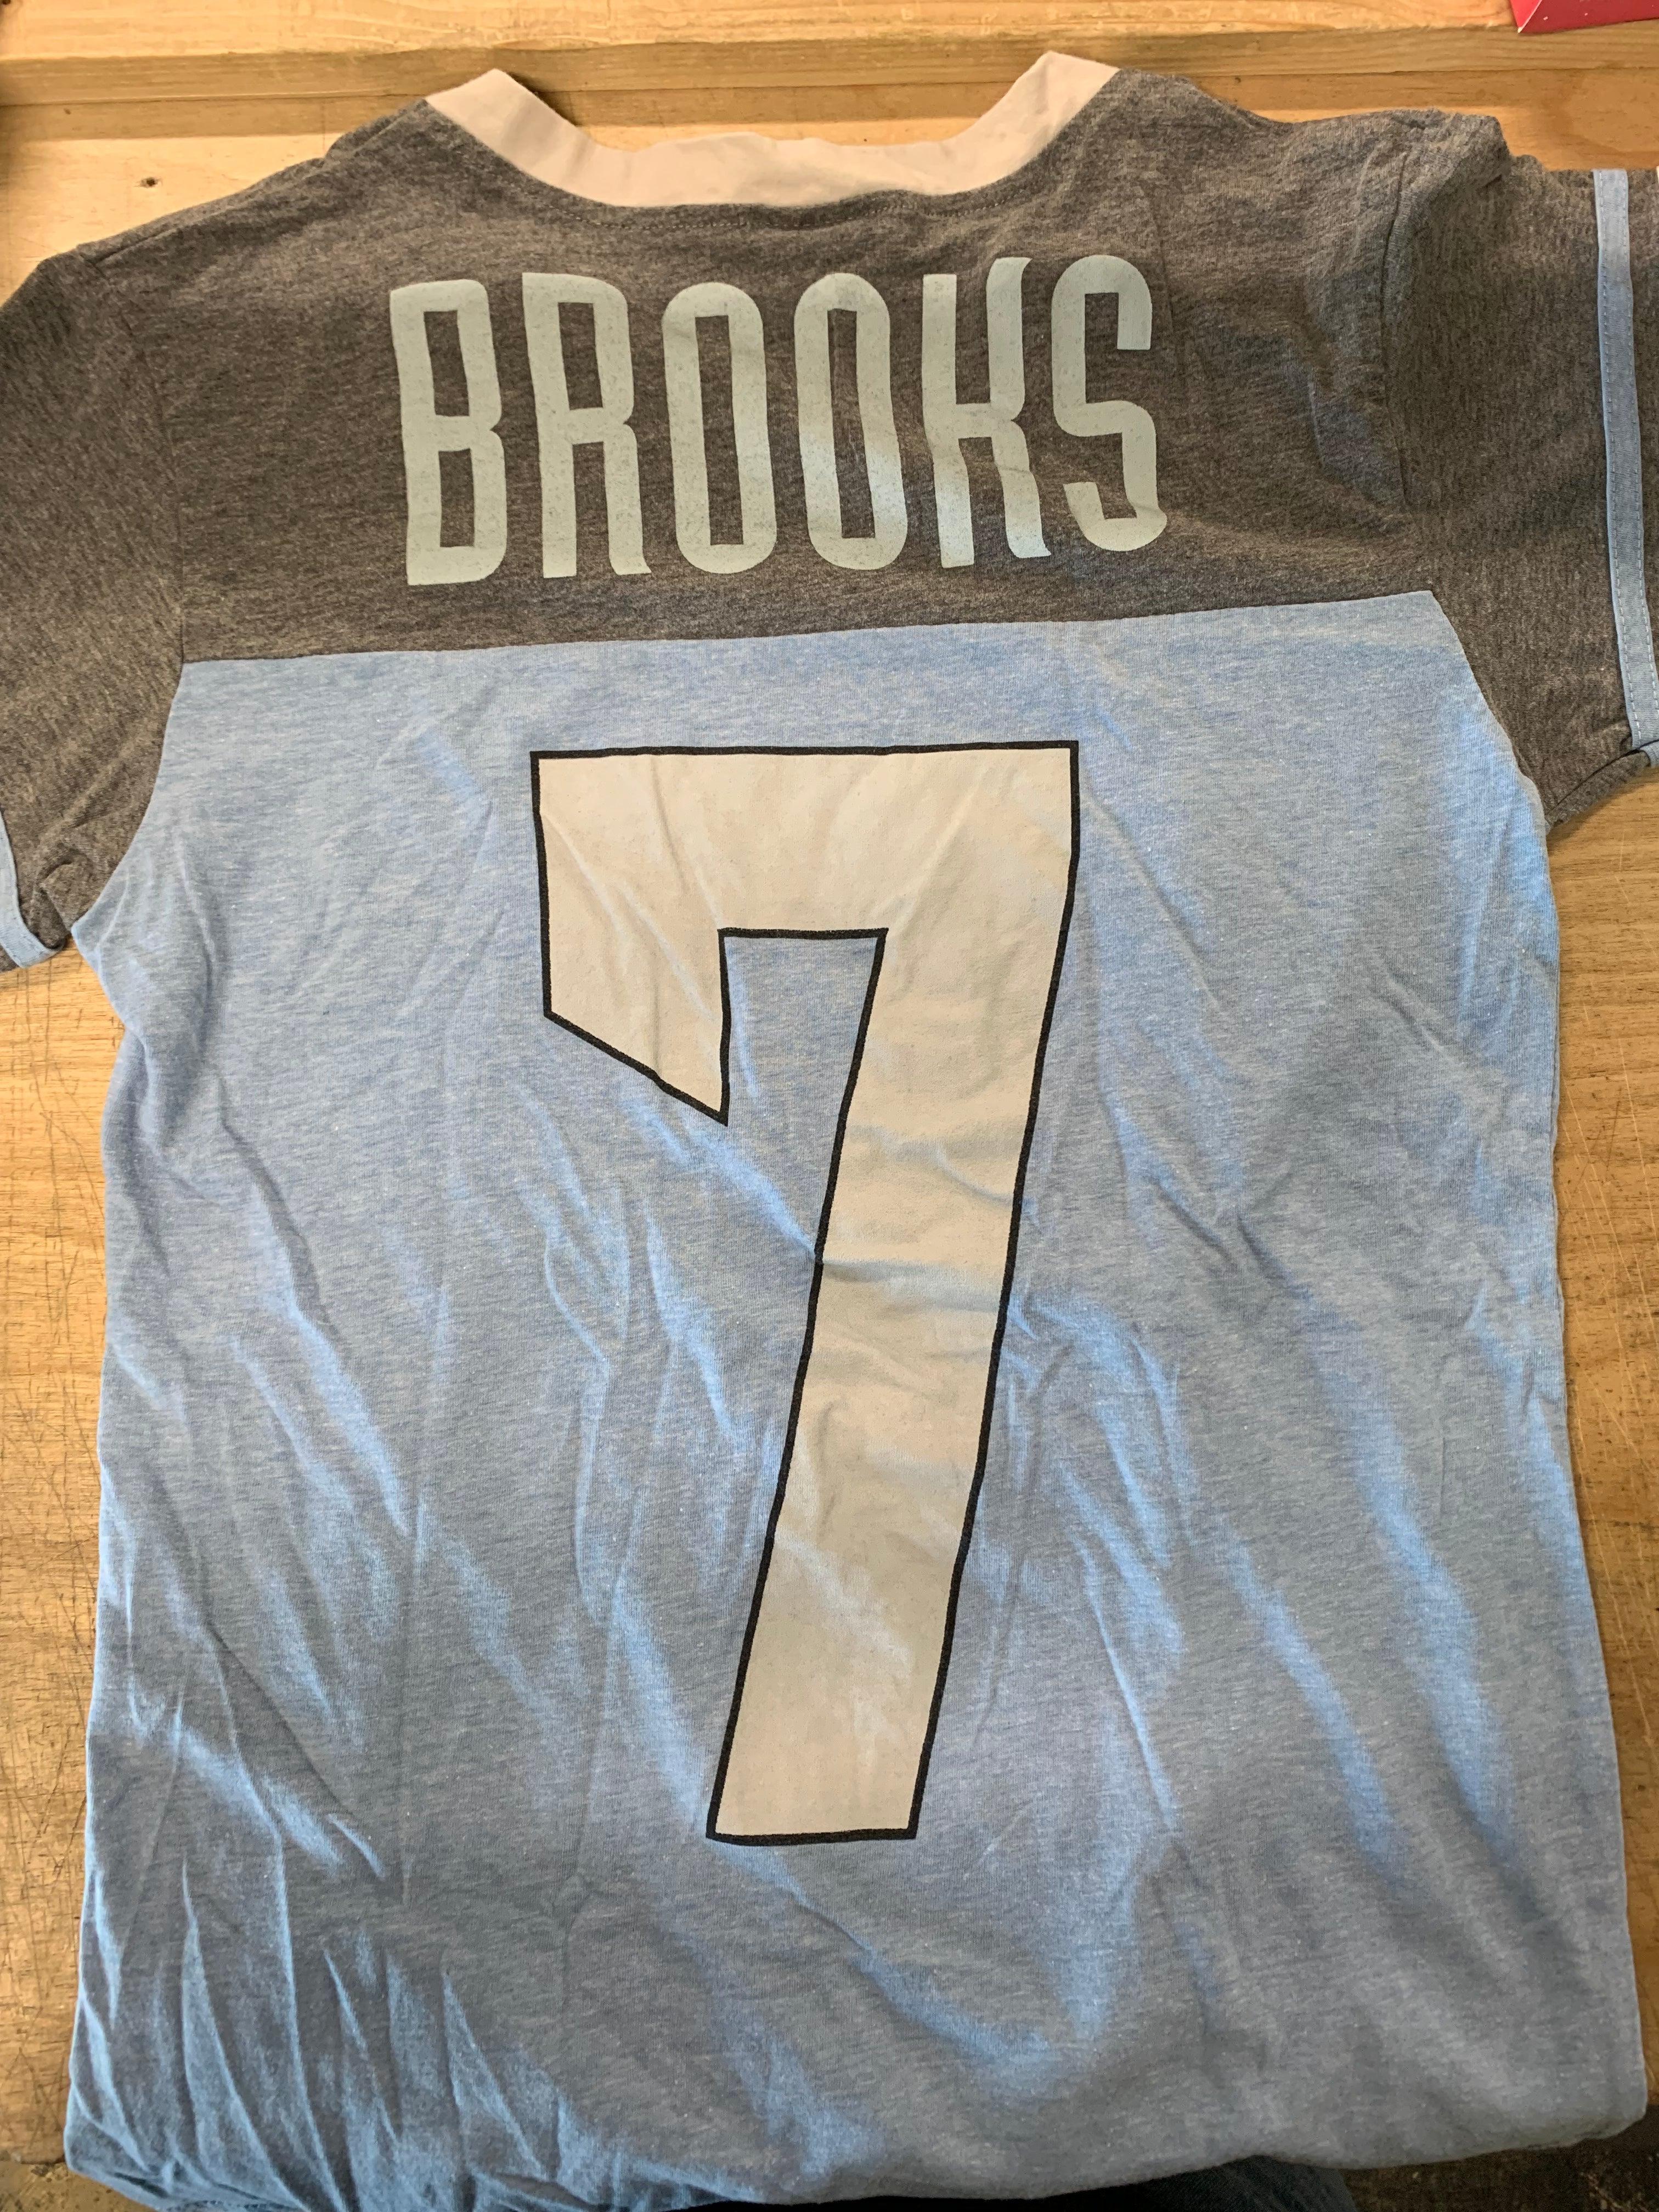 Garth Brooks Stadium Tour Exclusive T-Shirt, Blue/Gray, M